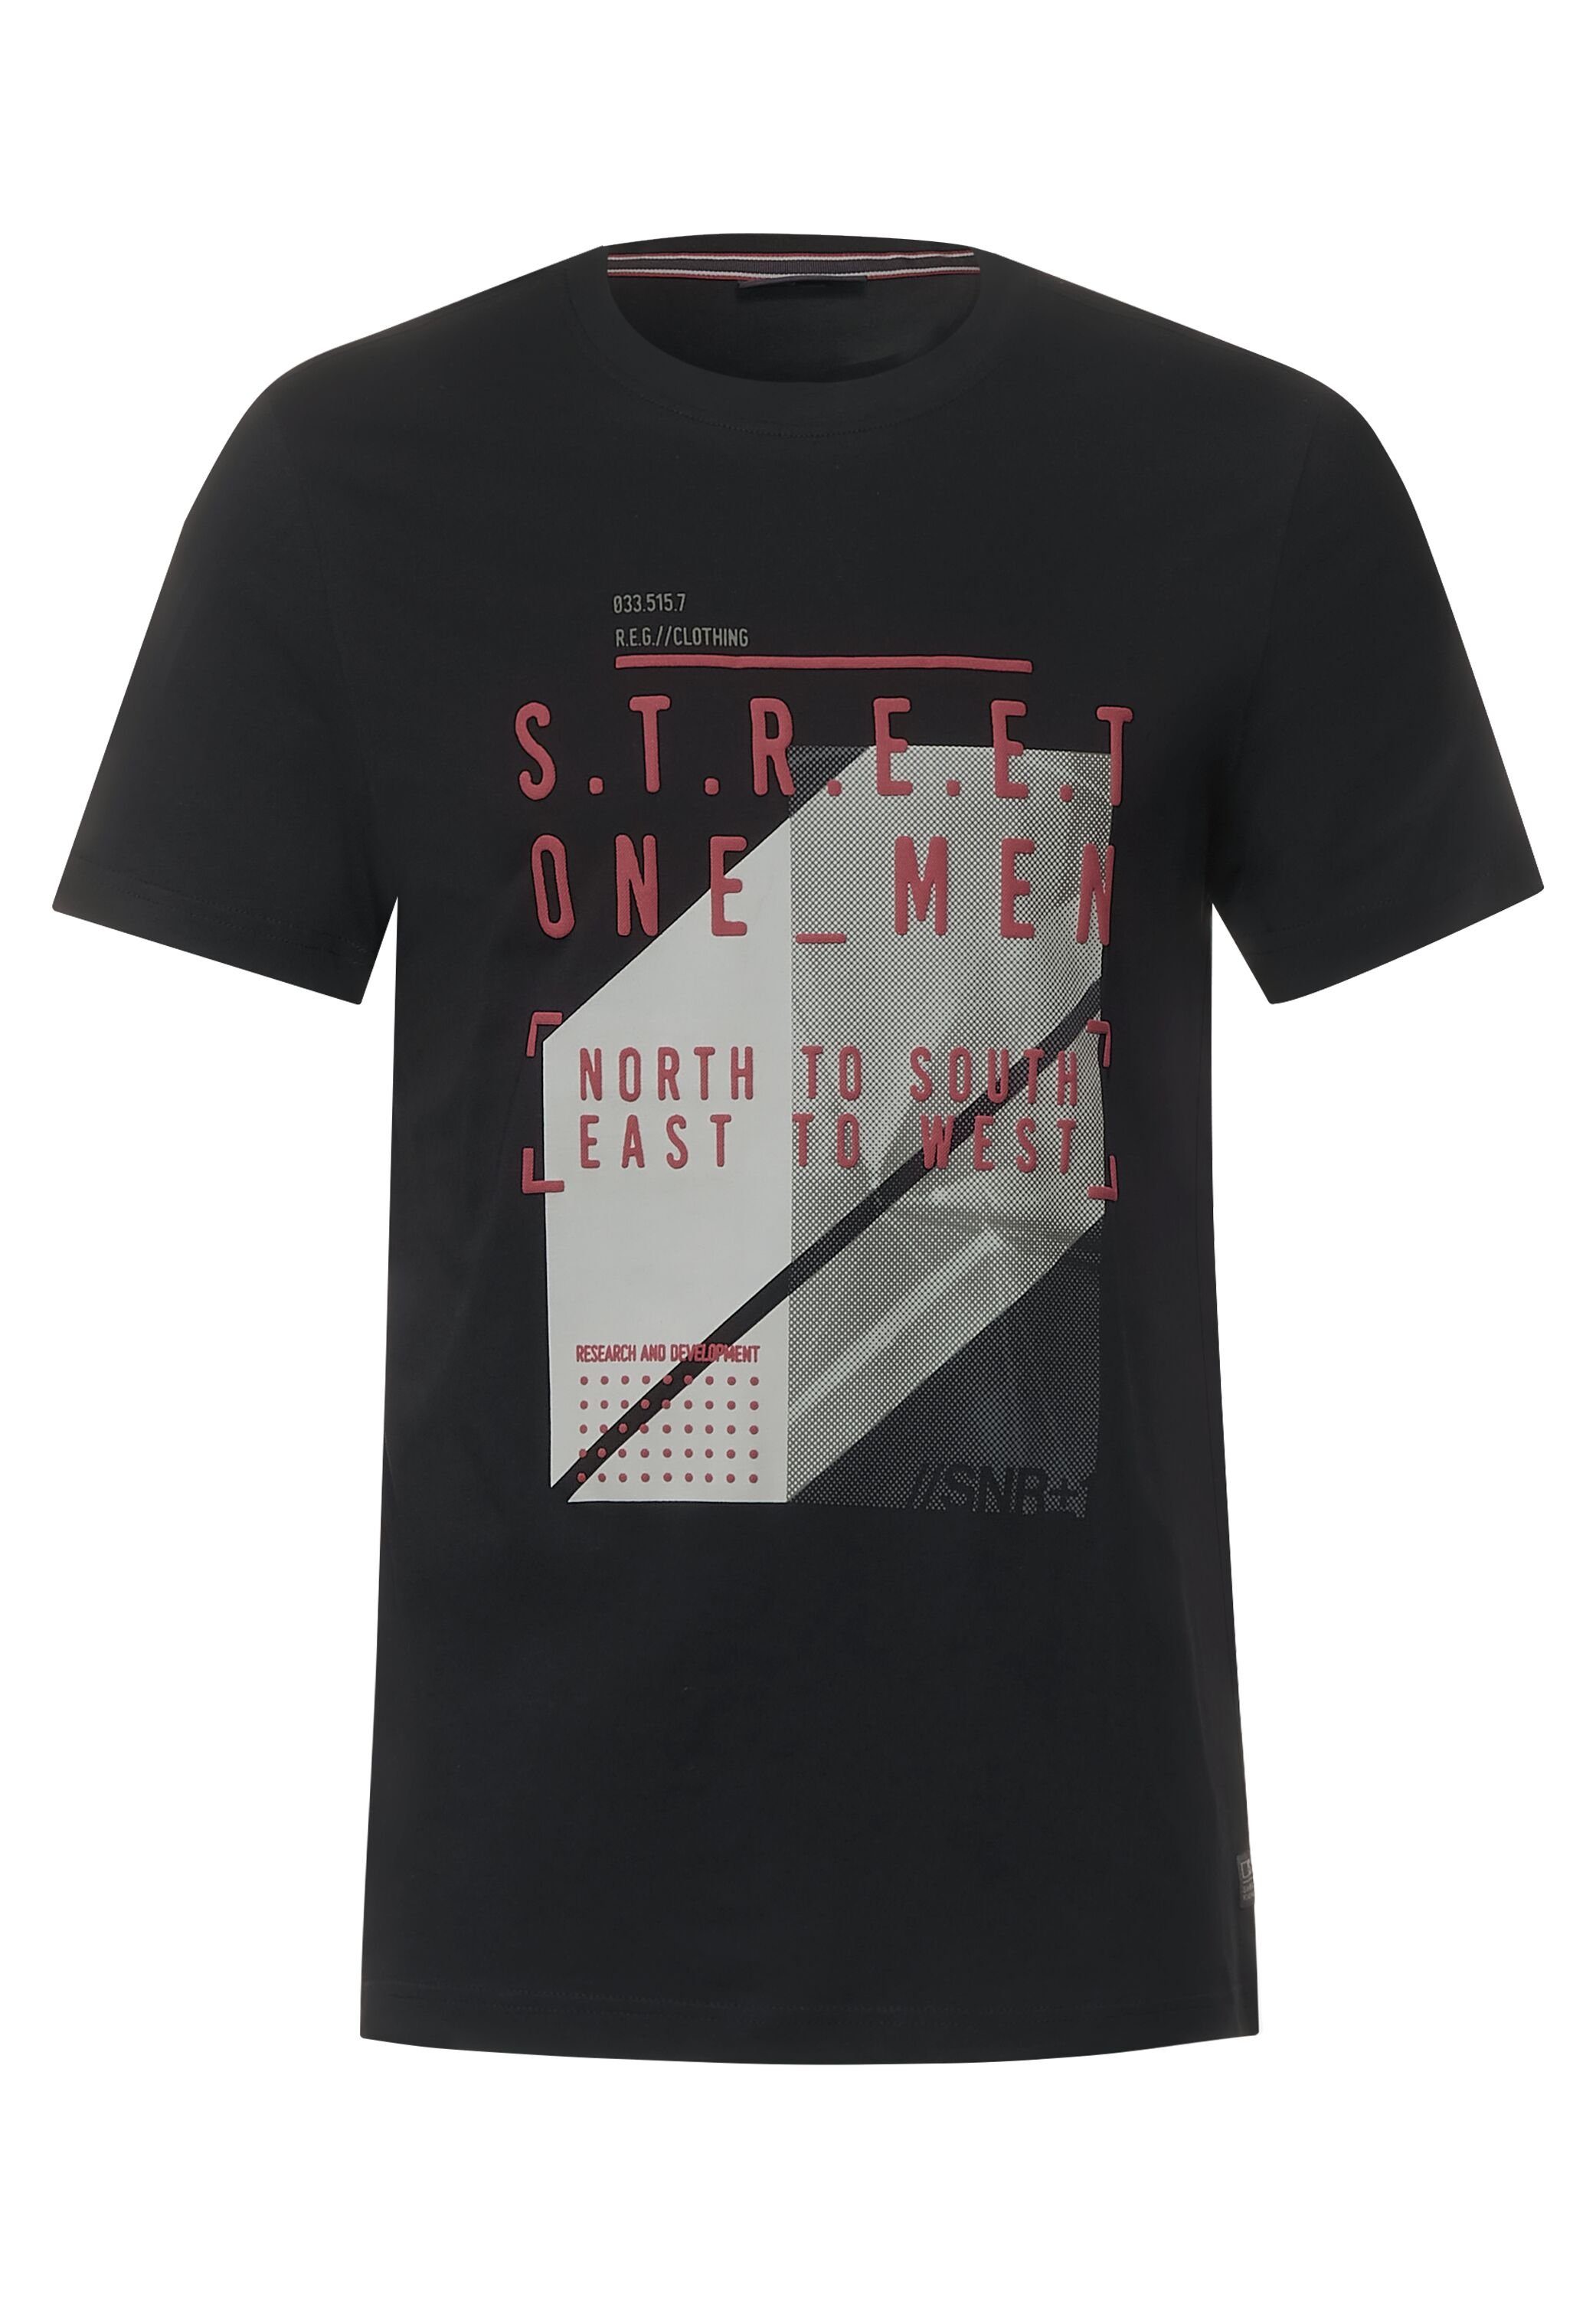 ONE MEN STREET Black T-Shirt